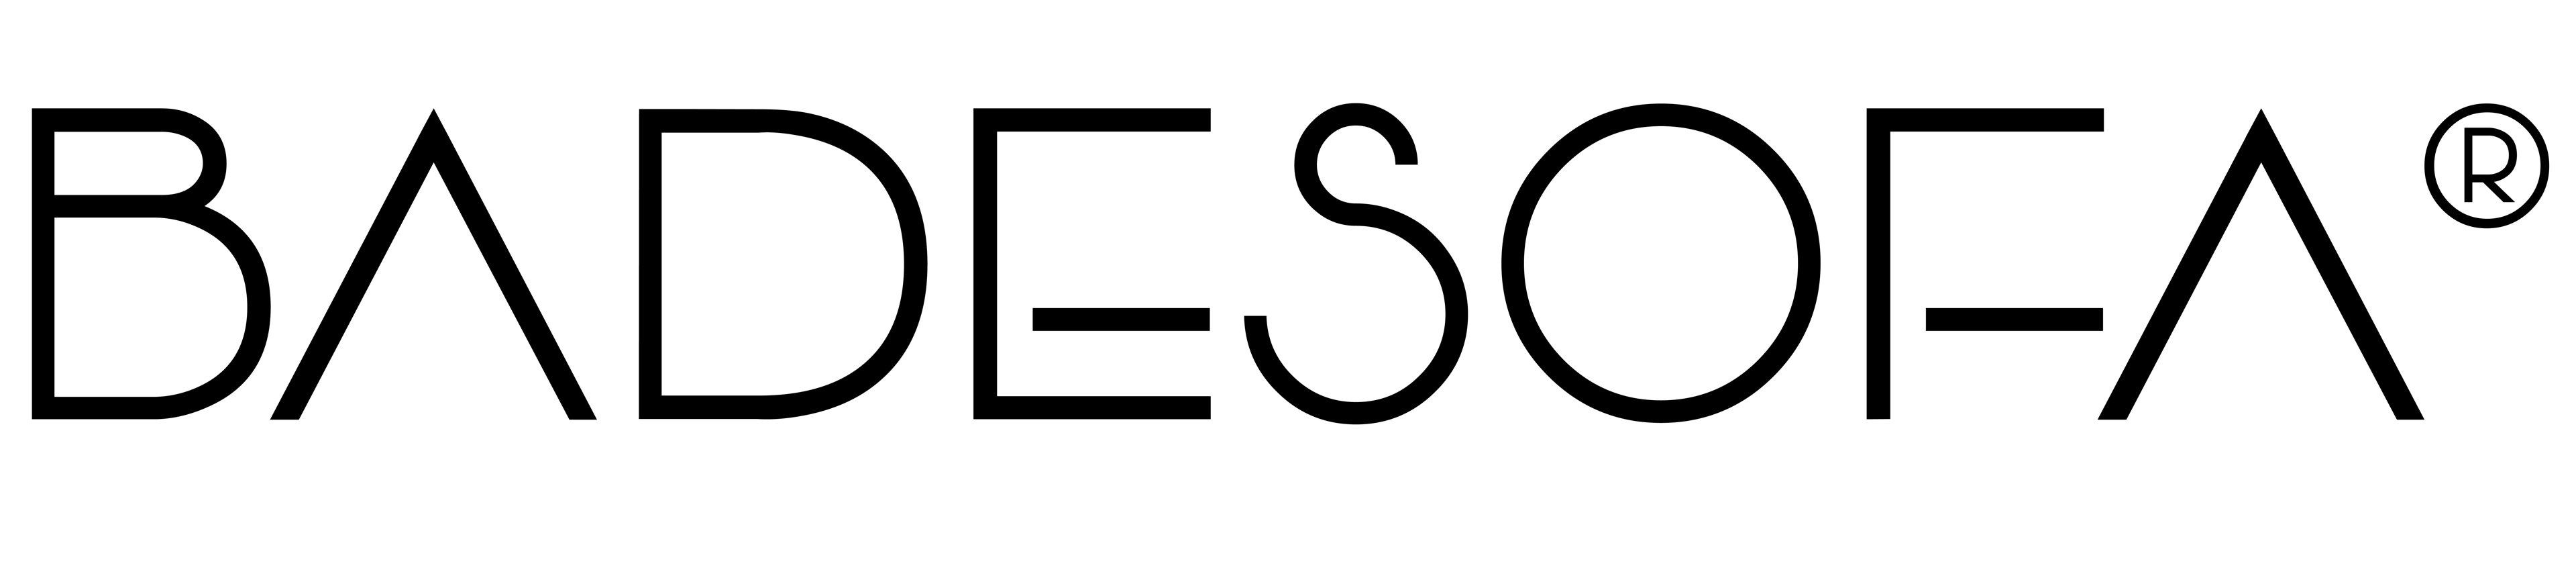 Badesofa brand logo freigestellt schwarz